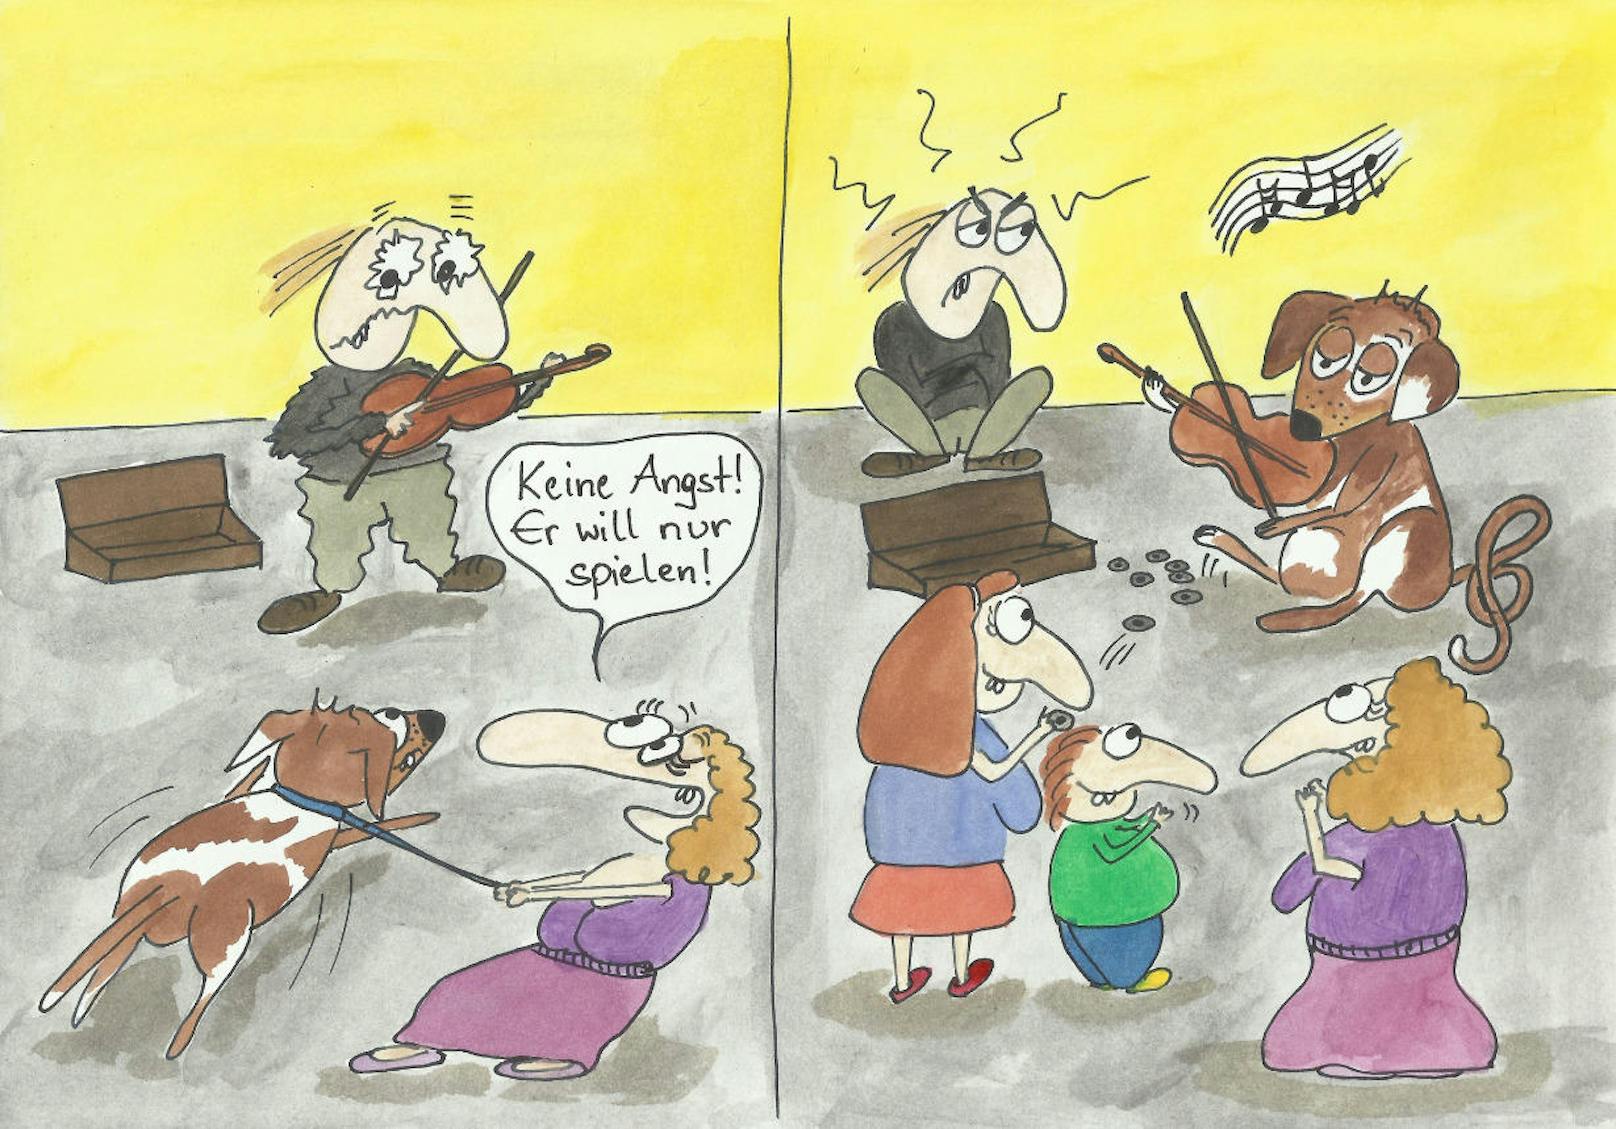 Bild aus dem Cartoon "Waldorf-Hundeschule & andere Cartoons" von Elisabeth Semrad